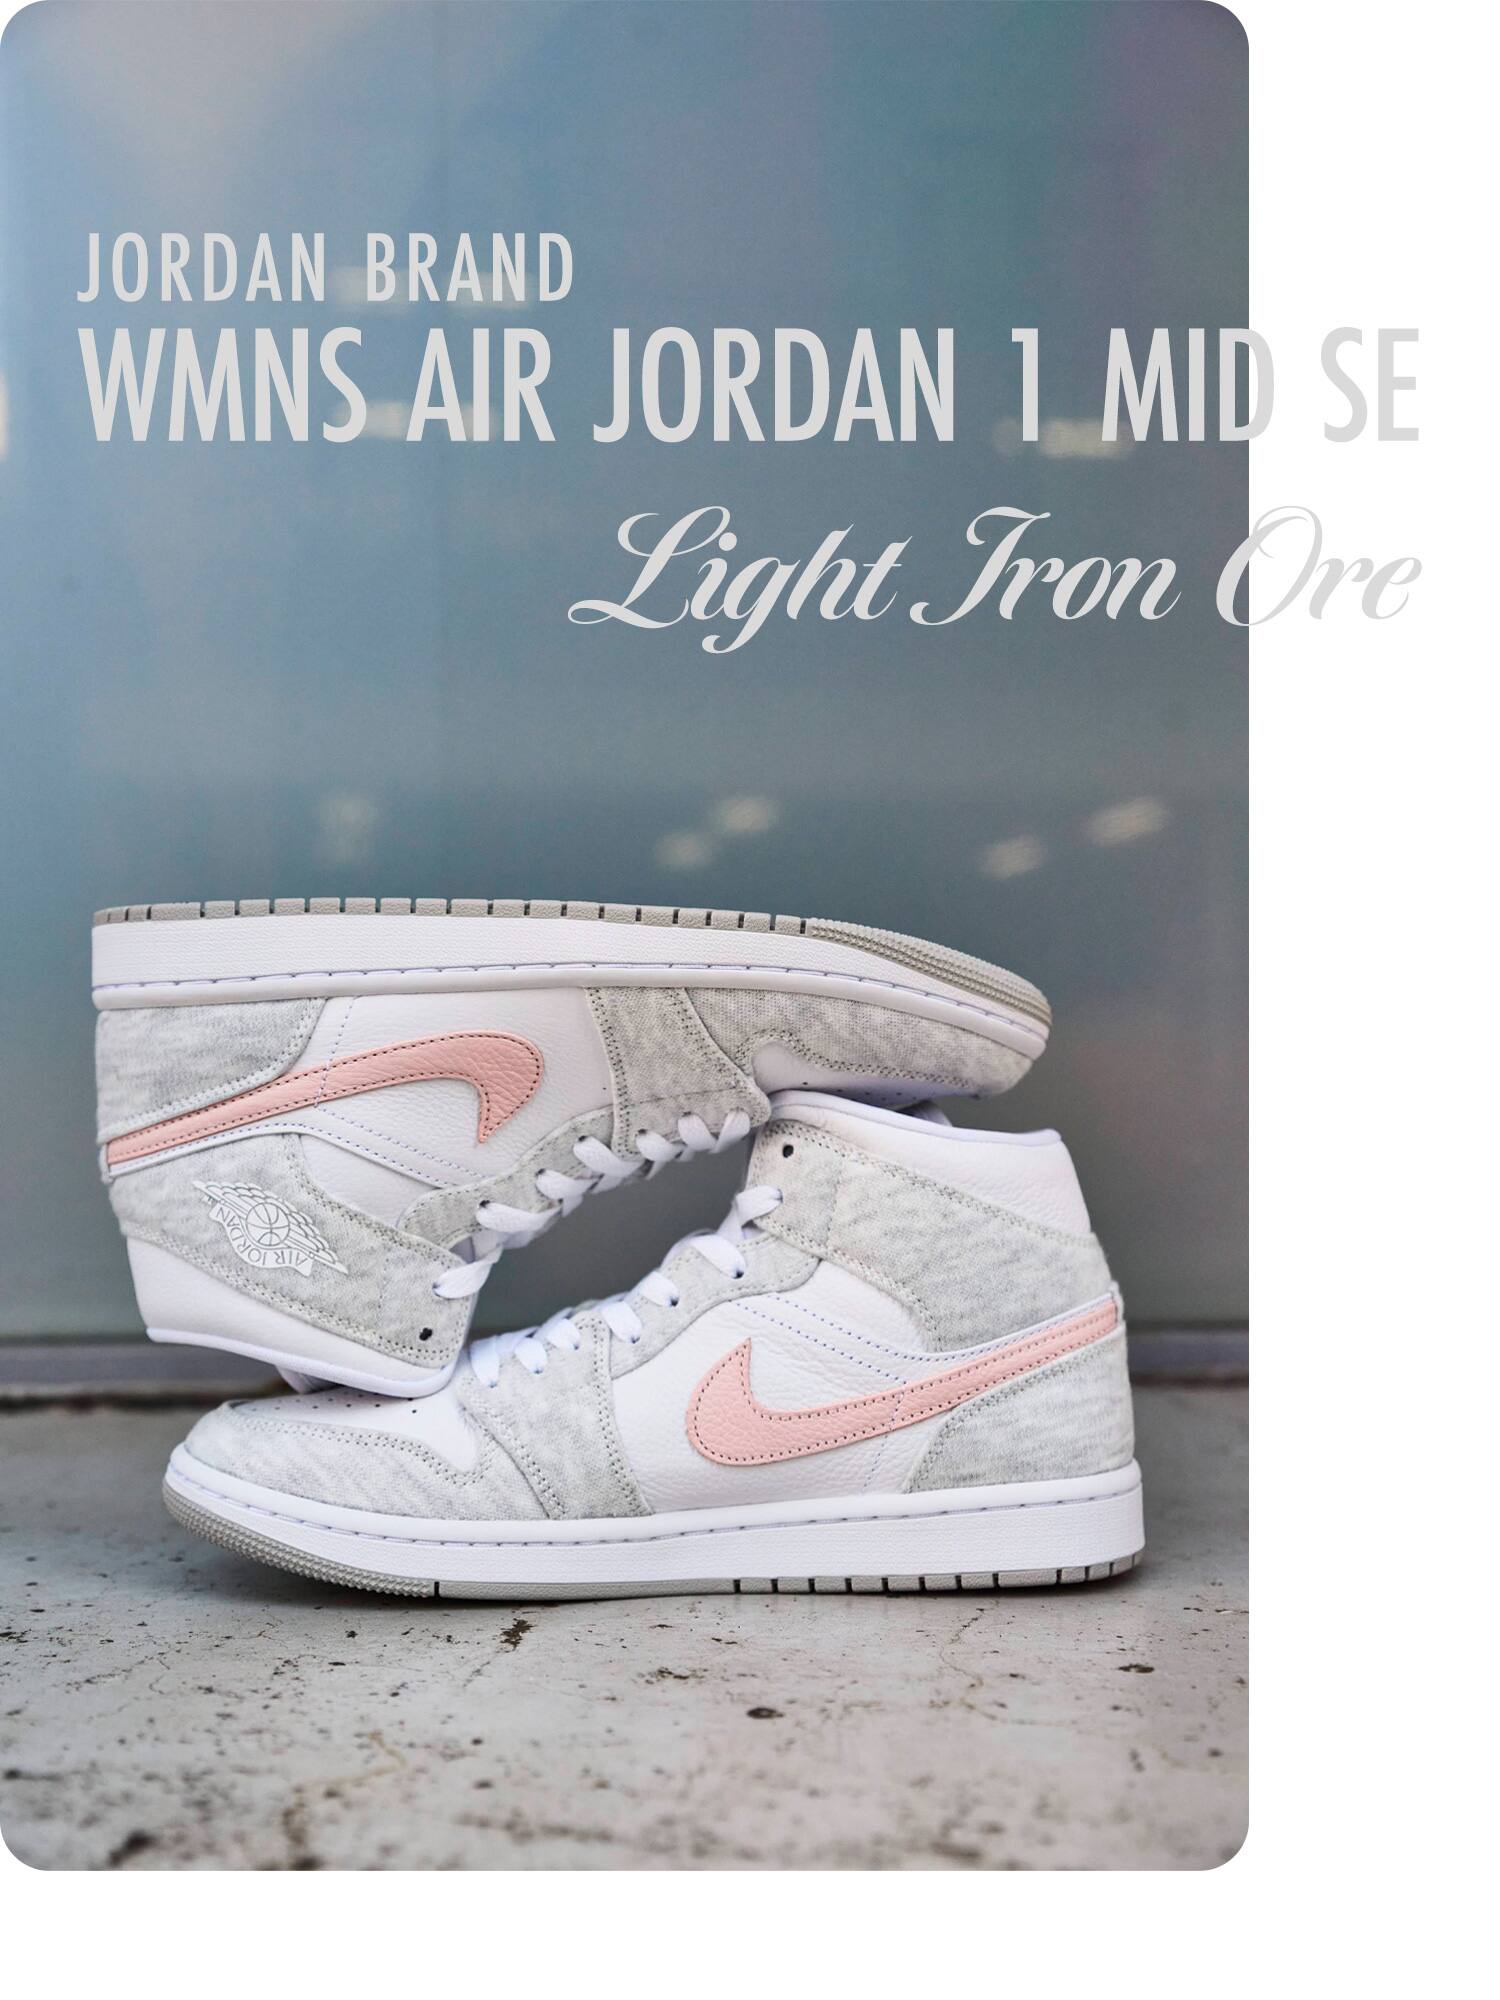 Nike WMNS Air Jordan 1 Mid SE Light Iron